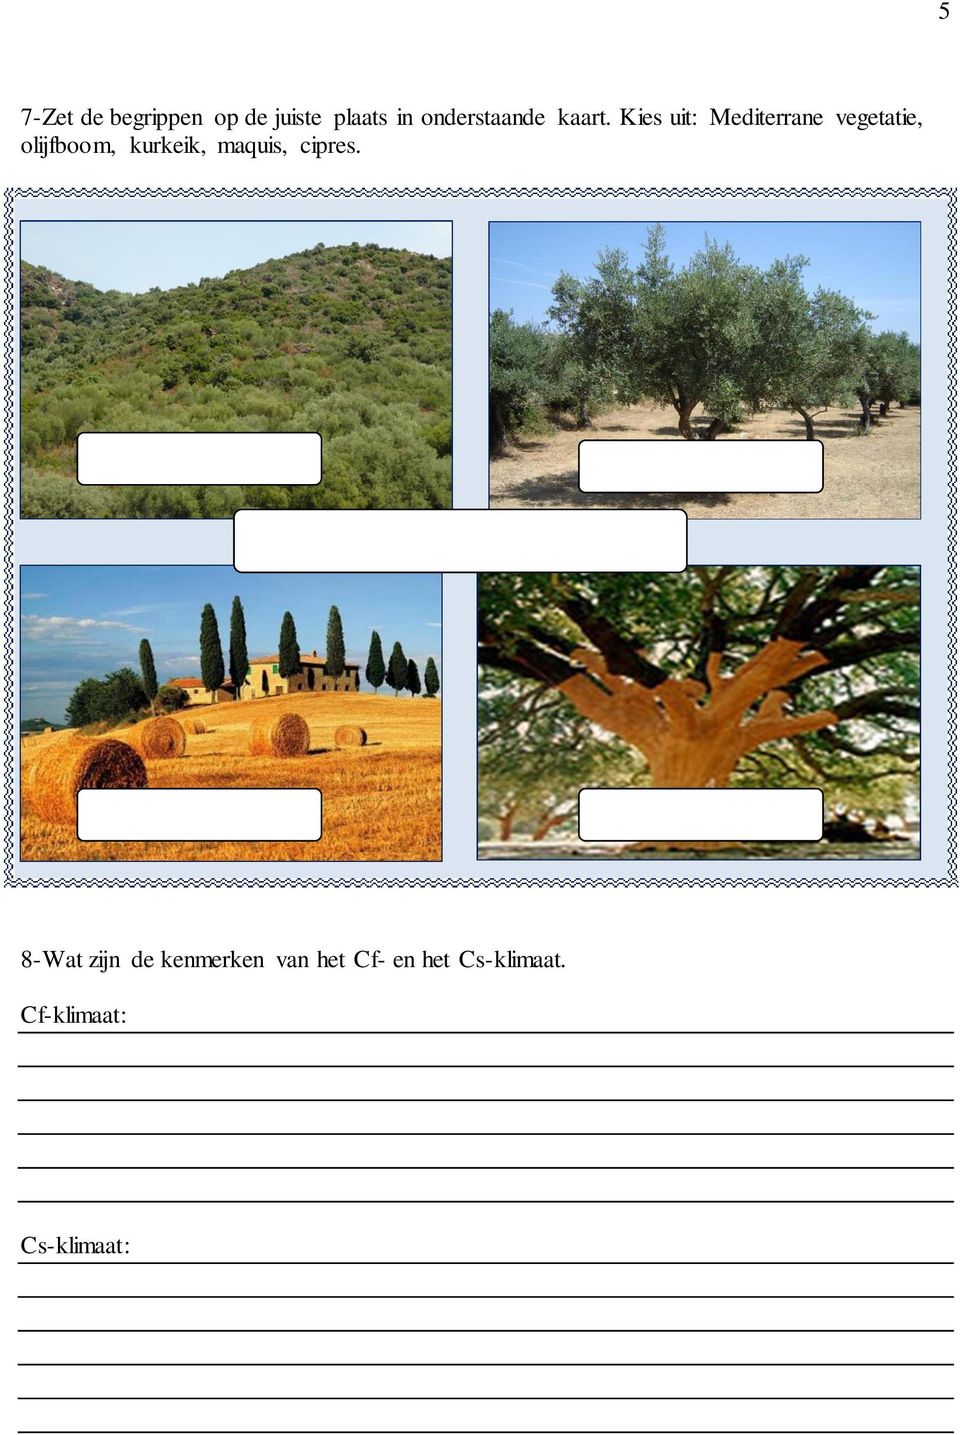 Kies uit: Mediterrane vegetatie, olijfboom, kurkeik,